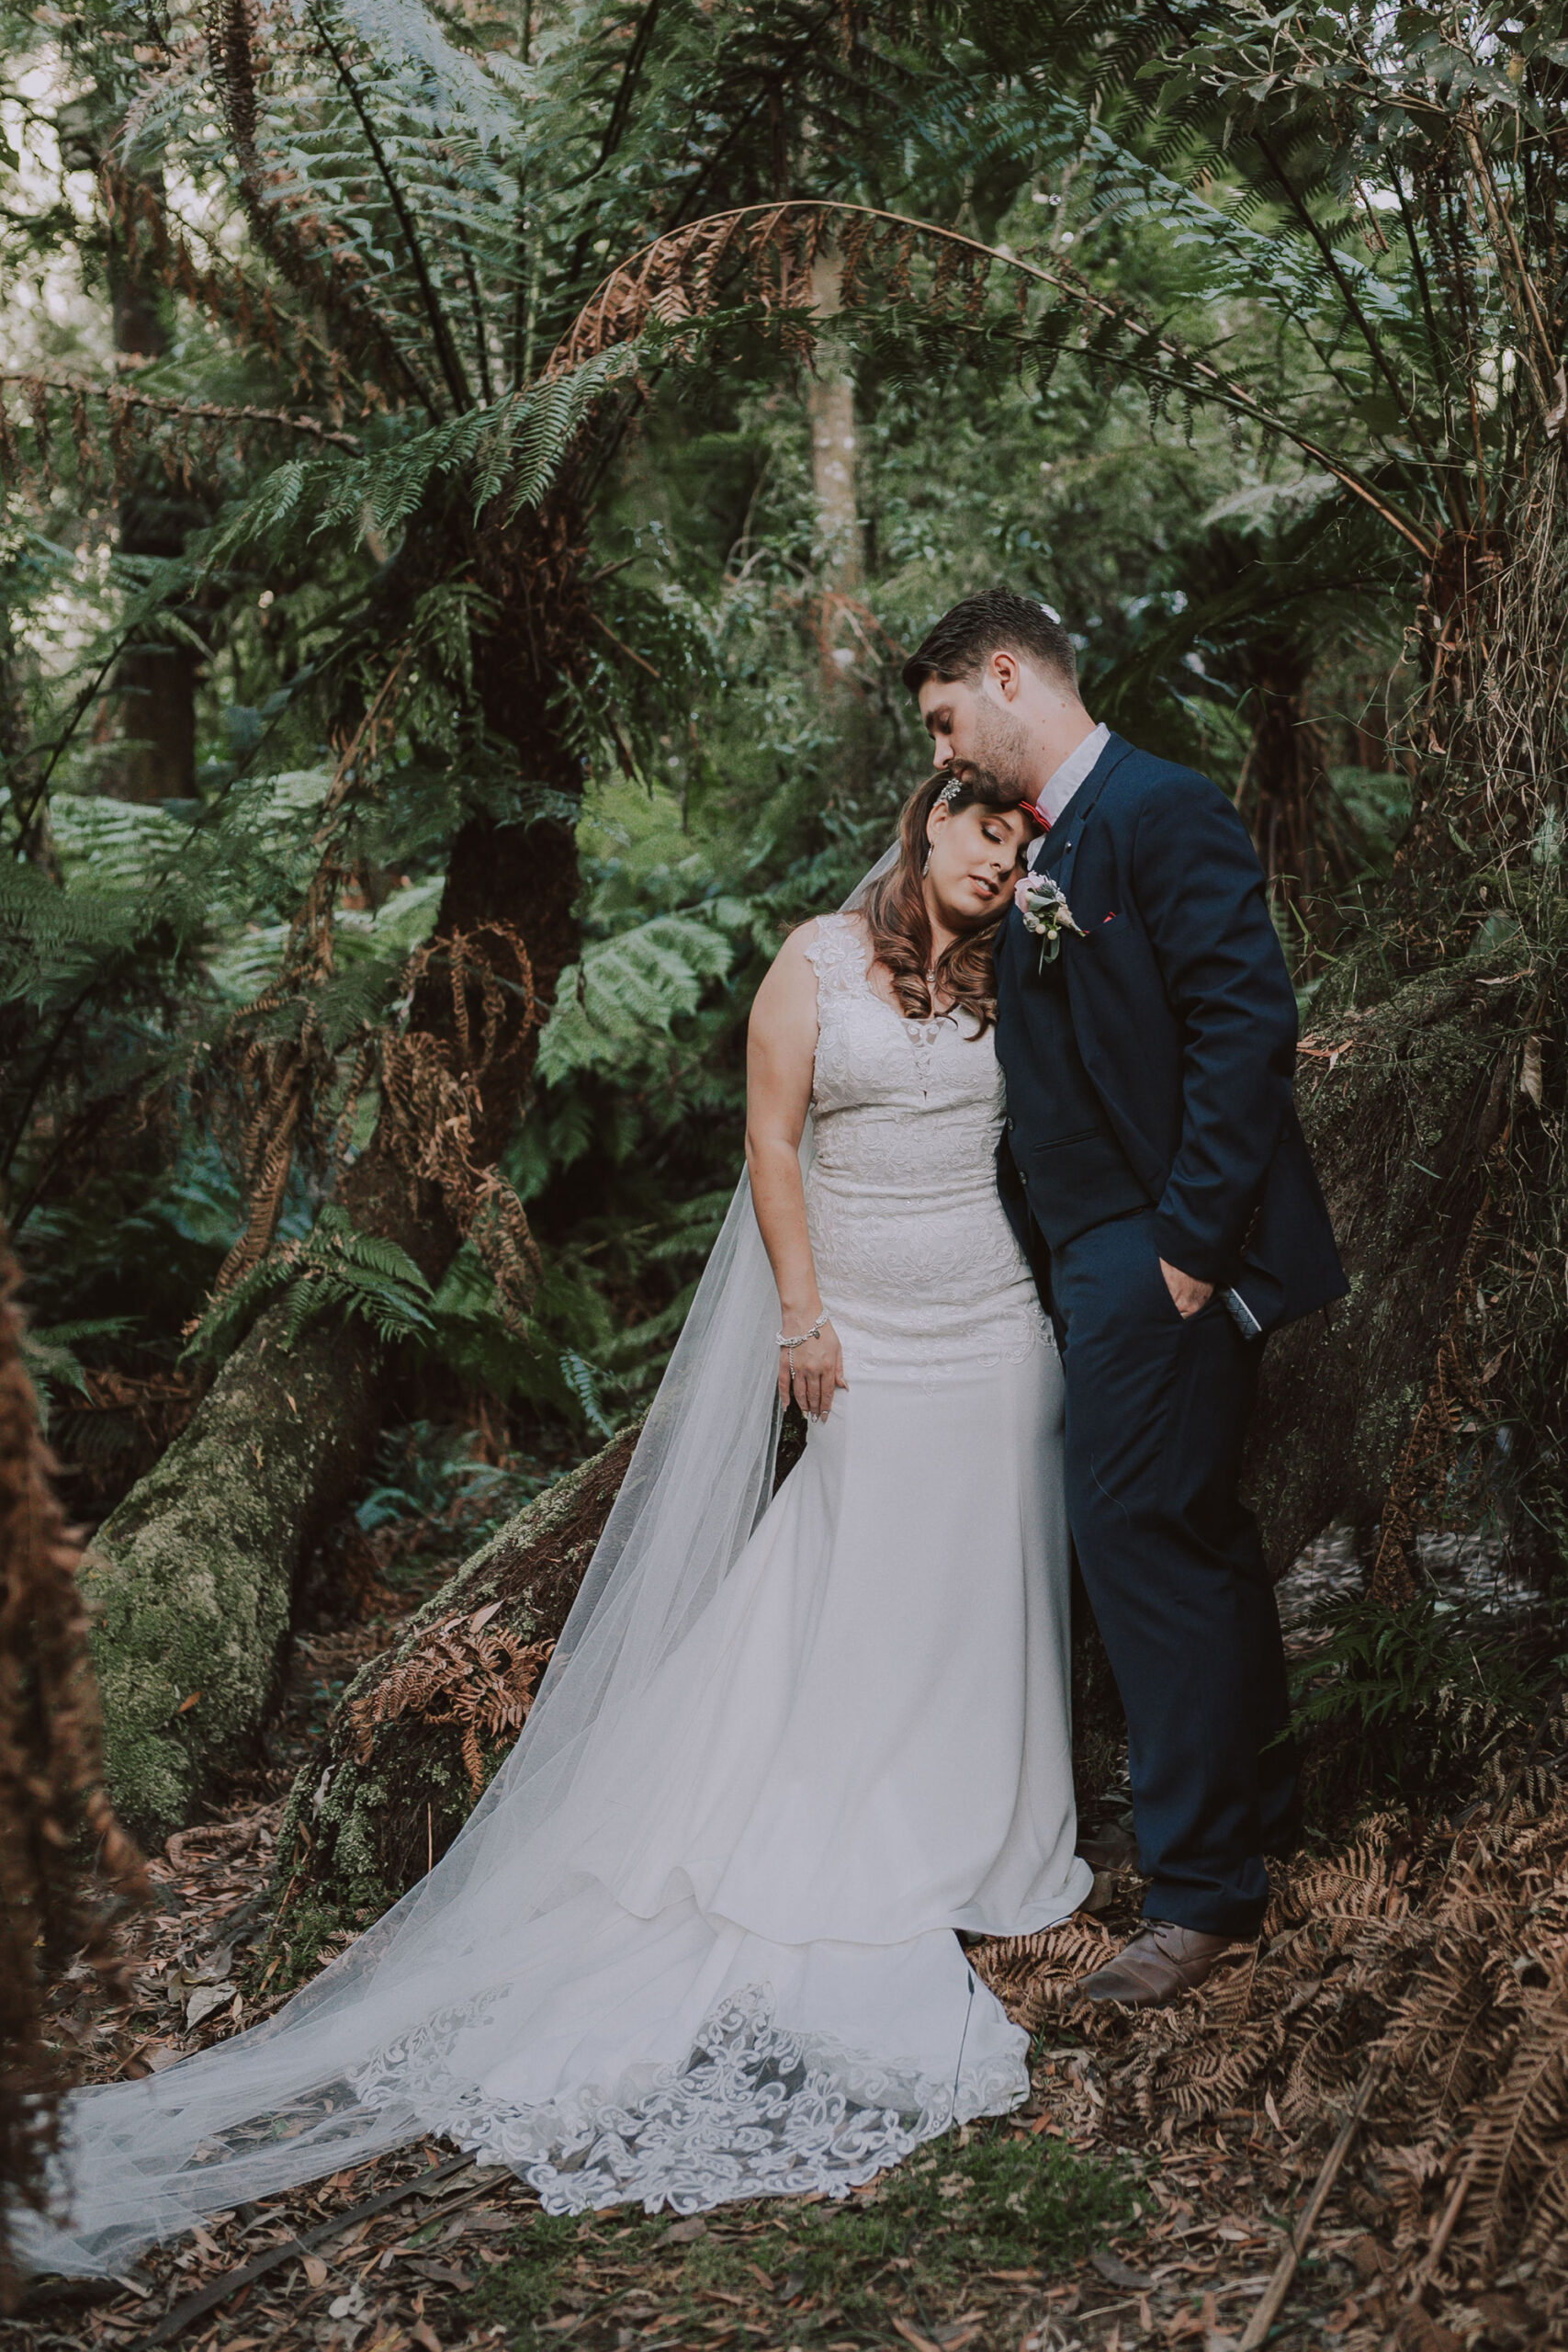 Alyssa Brody Rustic Garden Wedding Lovable Photography 040 scaled